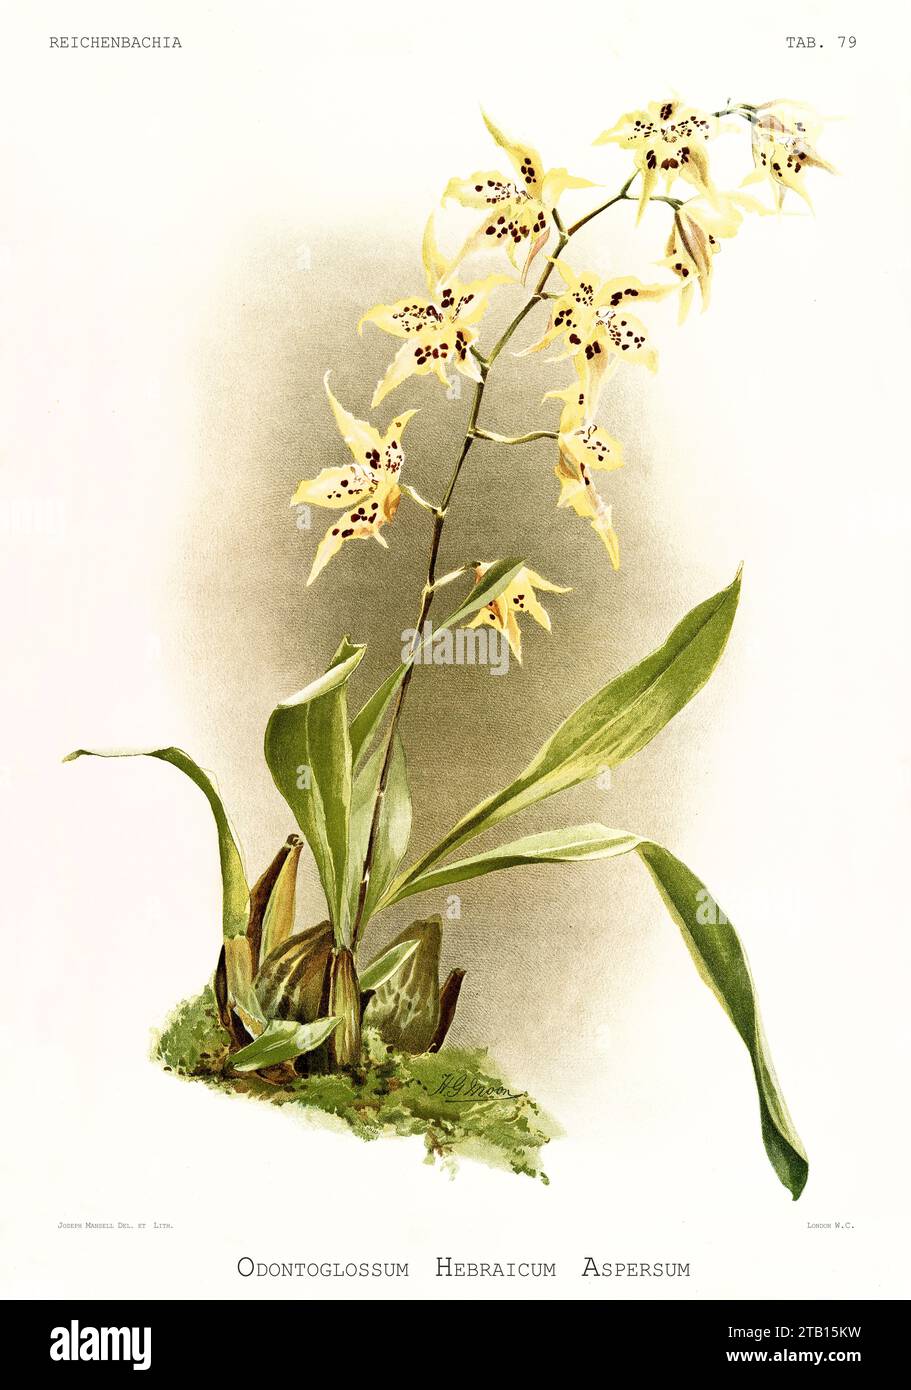 Old illustration of  Anderson's Odontoglossum (Oncidium andersonianum). Reichenbachia, by F. Sander. St. Albans, UK, 1888 - 1894 Stock Photo